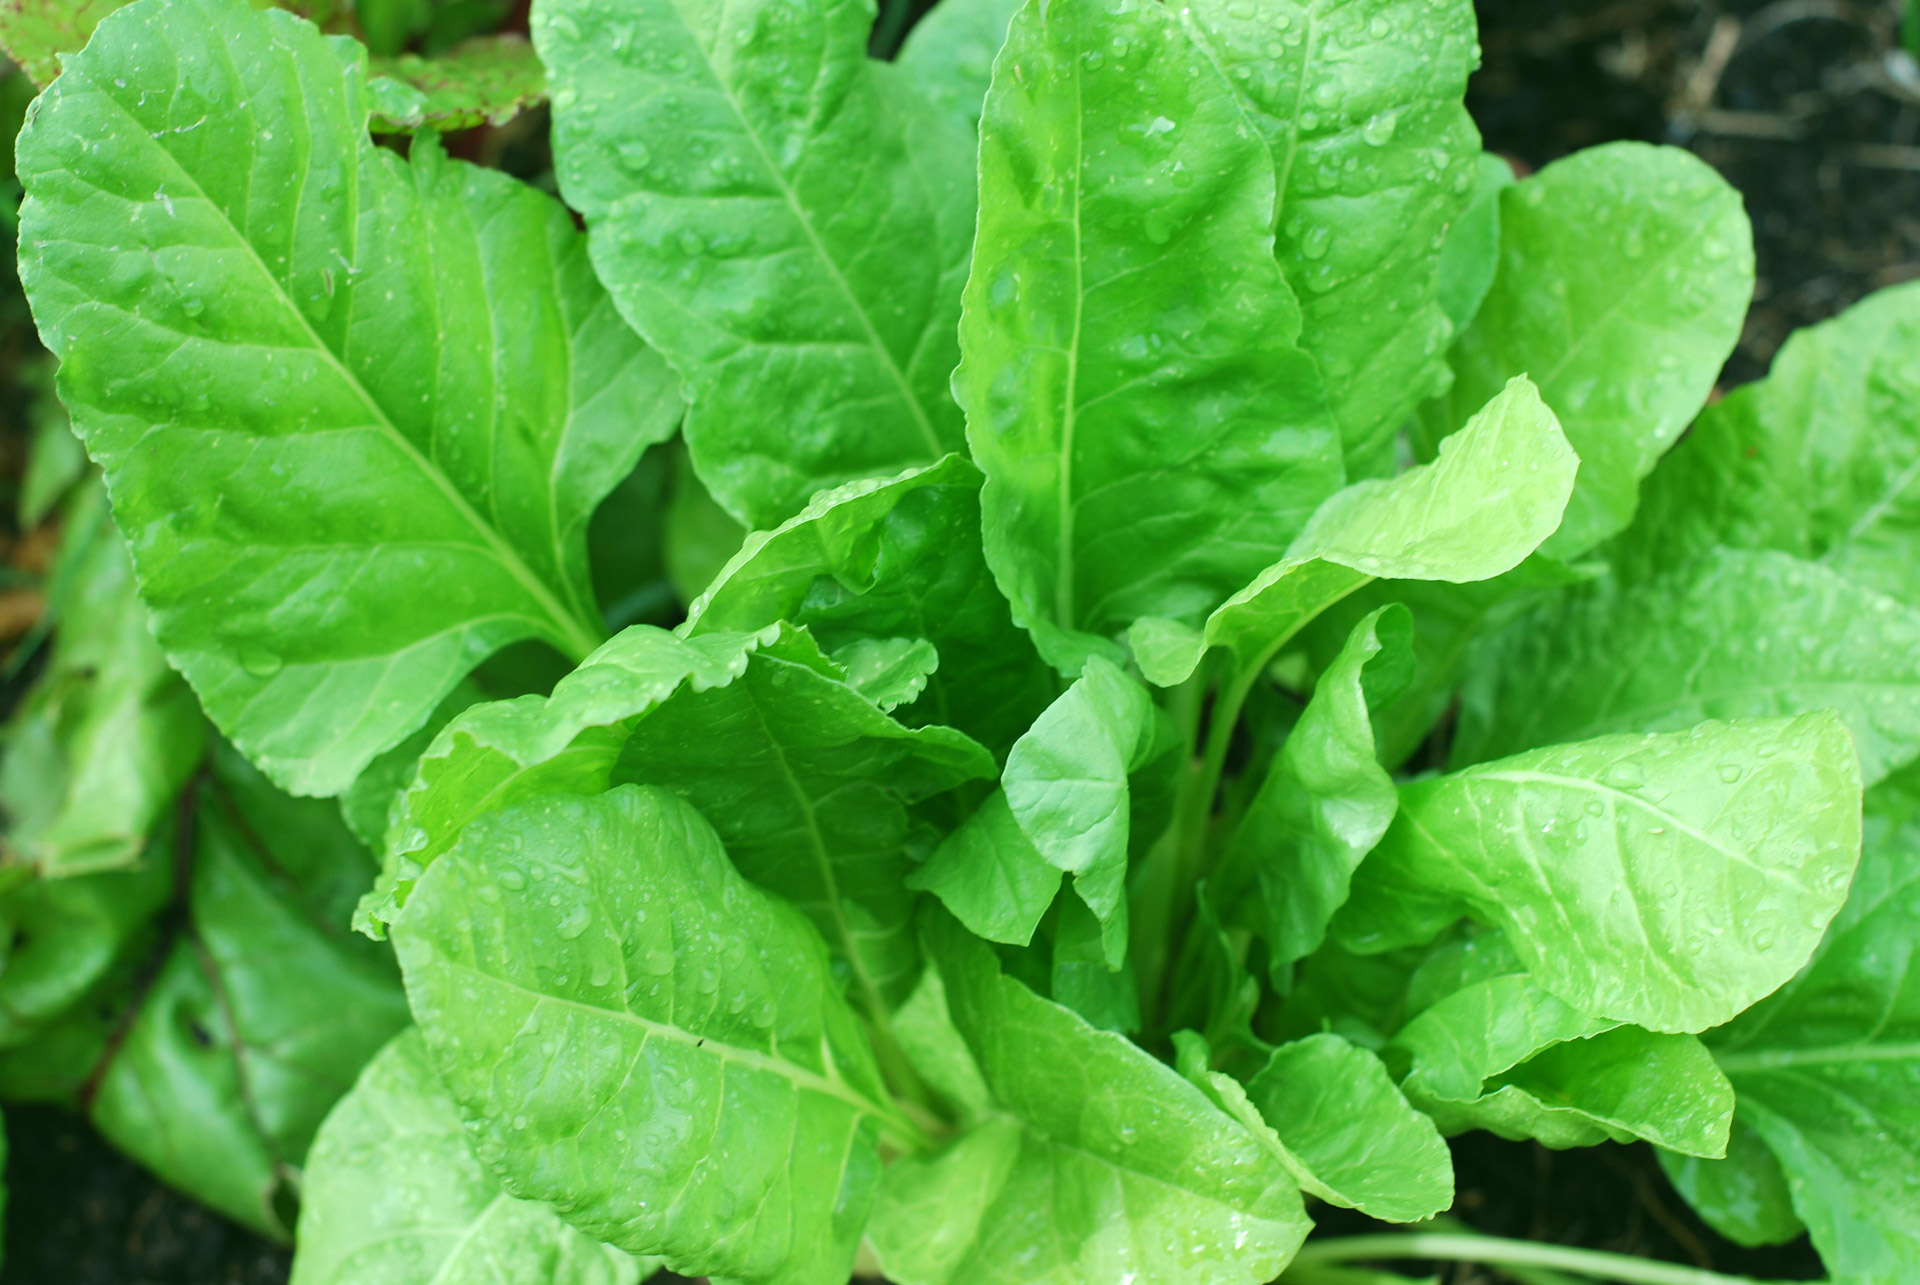 Organically grown spinach